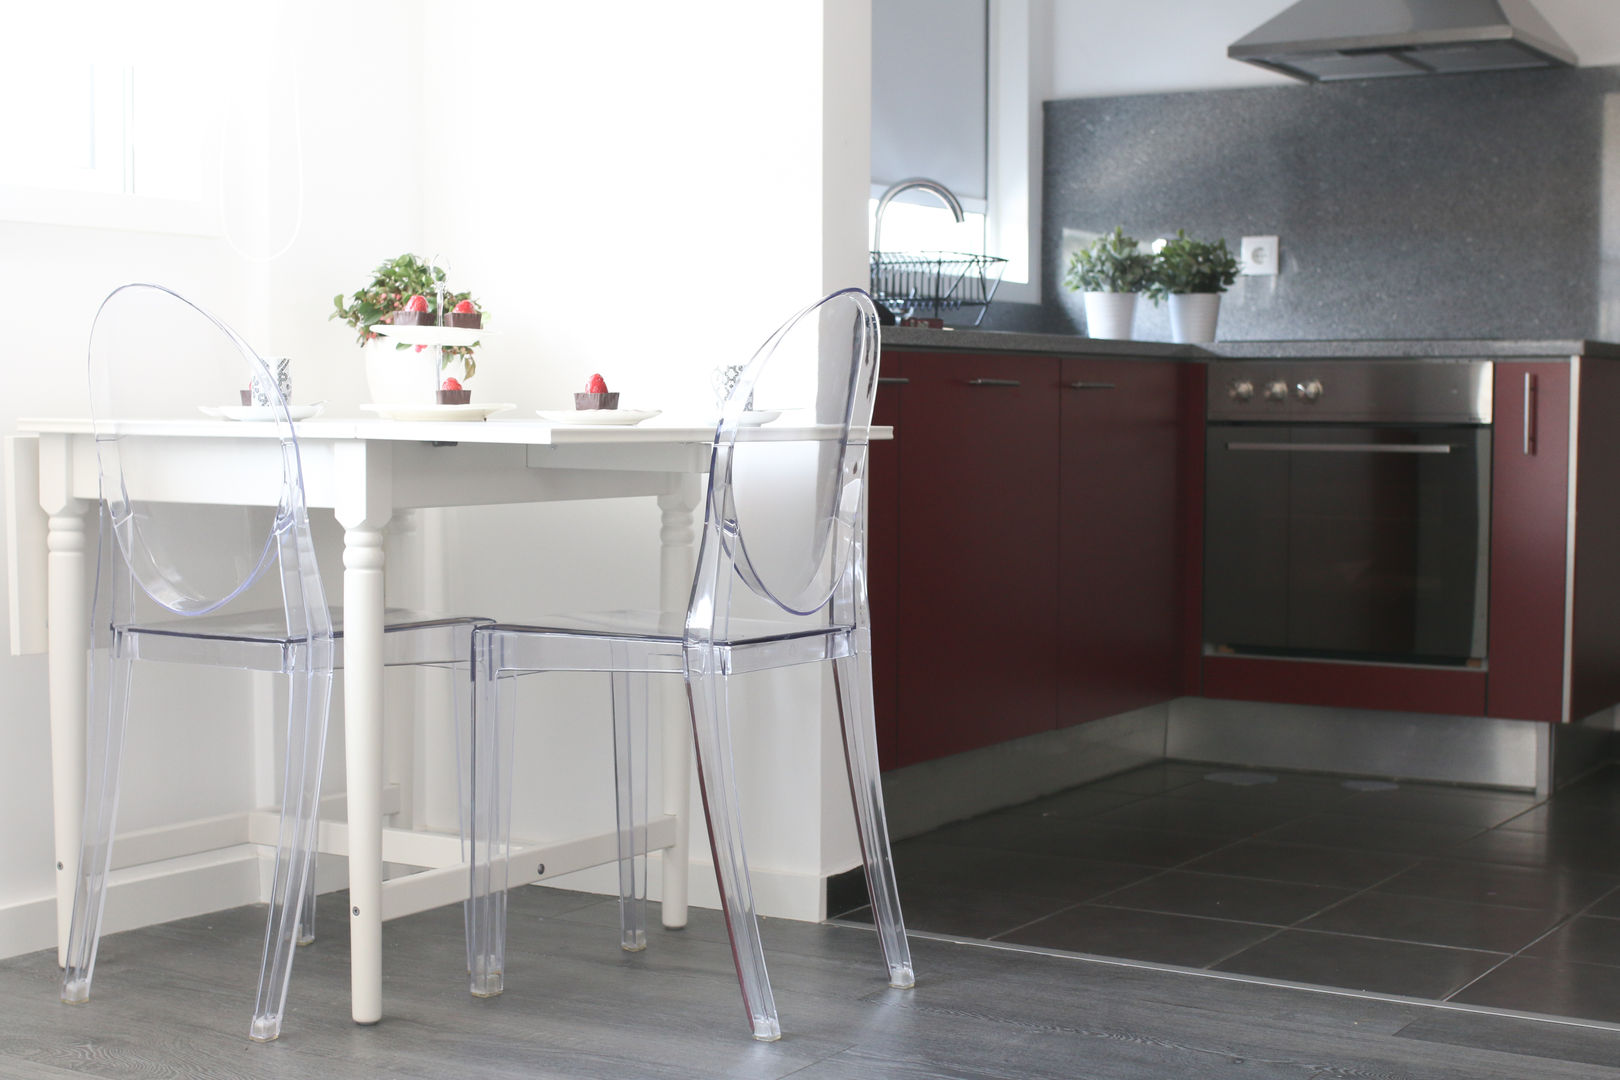 T0 estilo nórdico, Perfect Home Interiors Perfect Home Interiors Scandinavische keukens